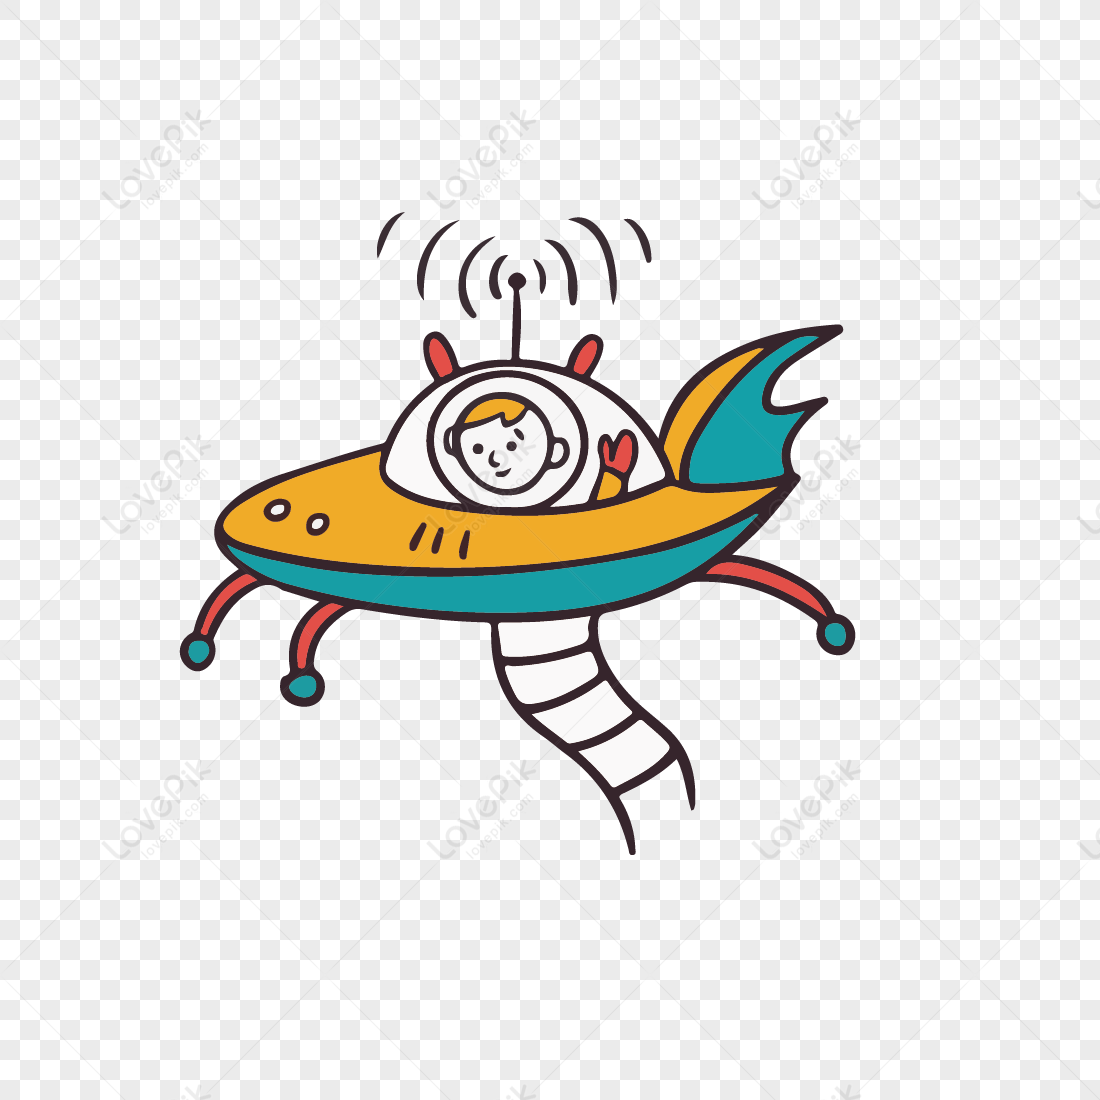 Disco Voador Alienígena Dos Desenhos Animados. Nave Espacial